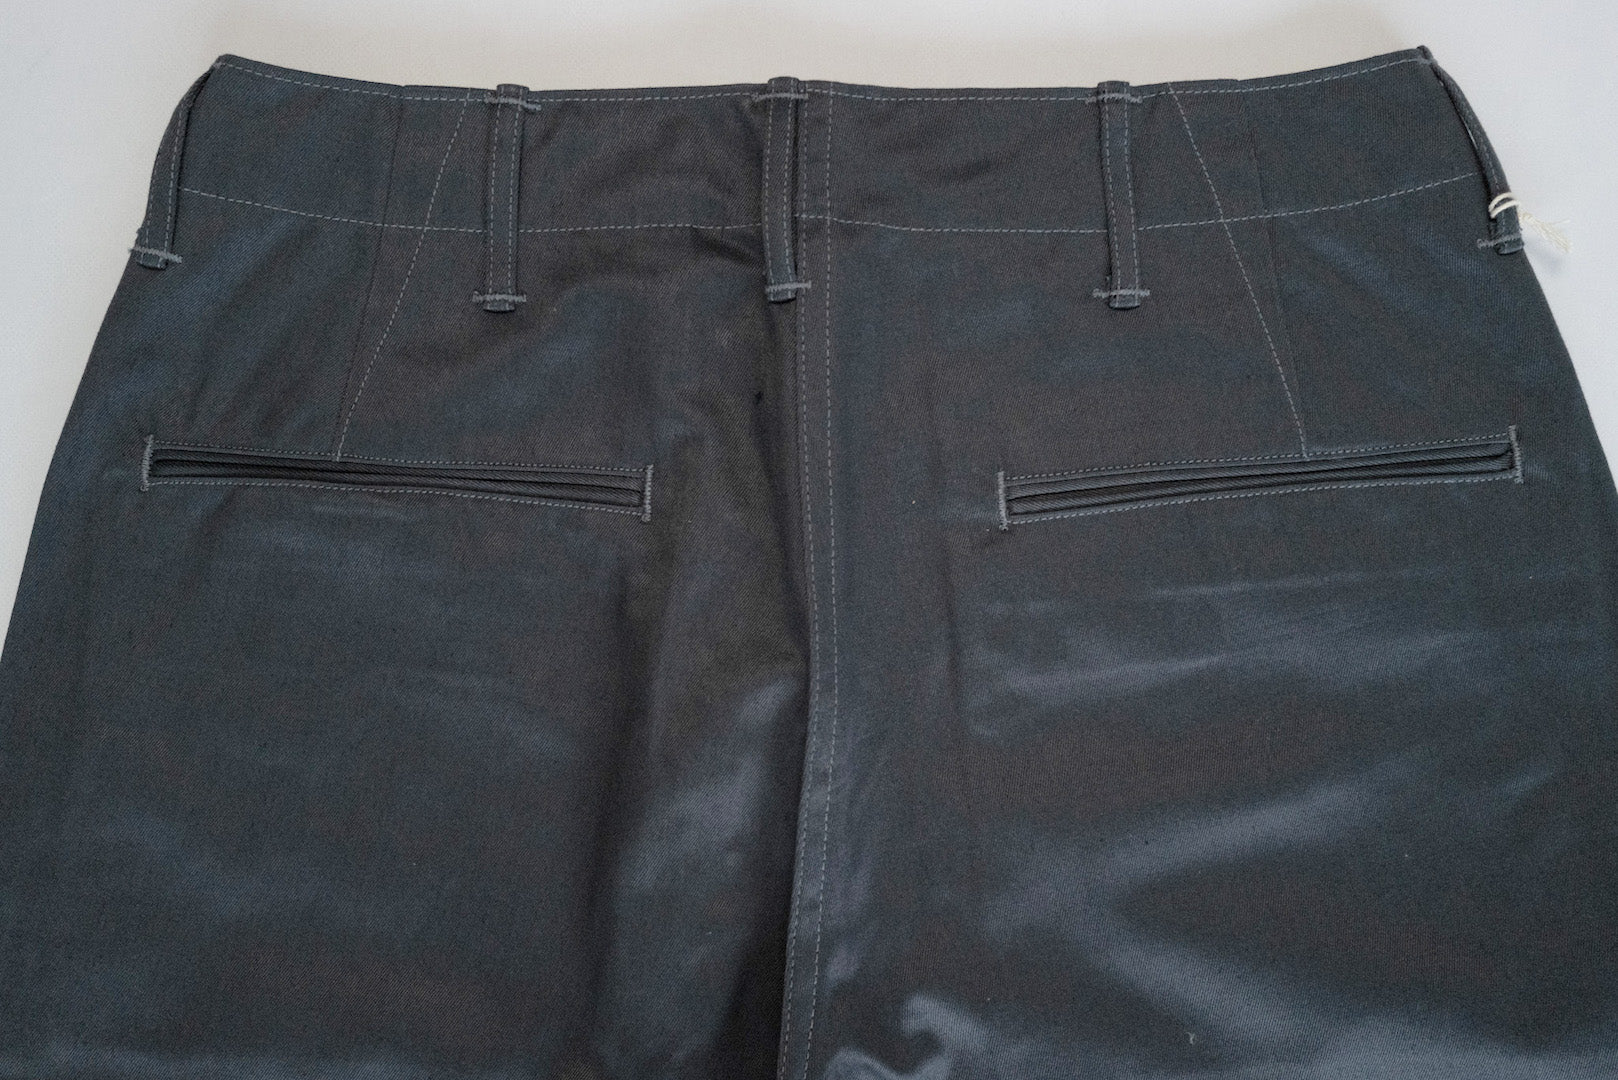 Warehouse 11oz Weapon Chino Shorts (Charcoal Grey)